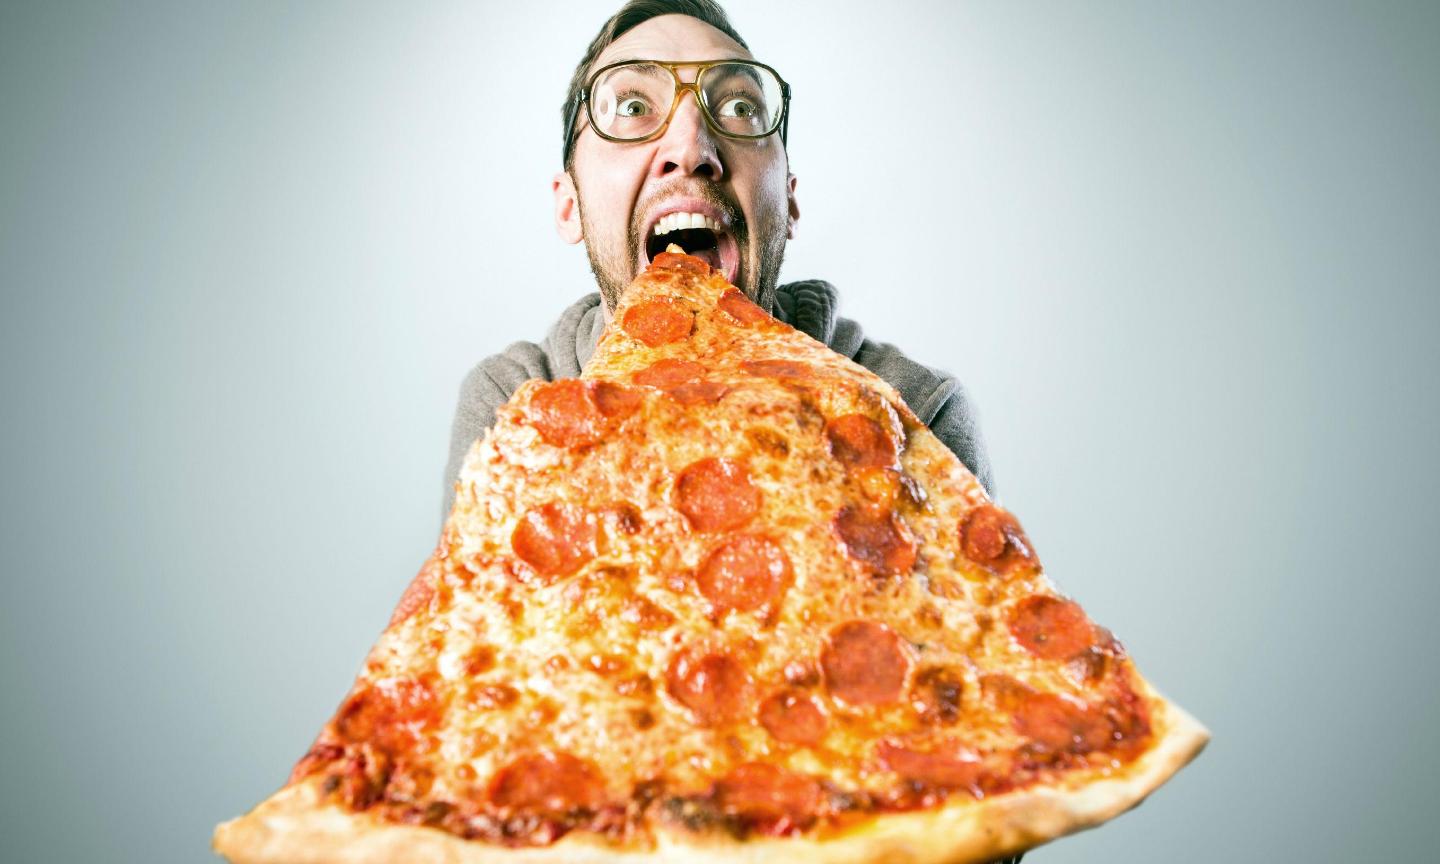 news_man_eating_huge_pizza.jpg